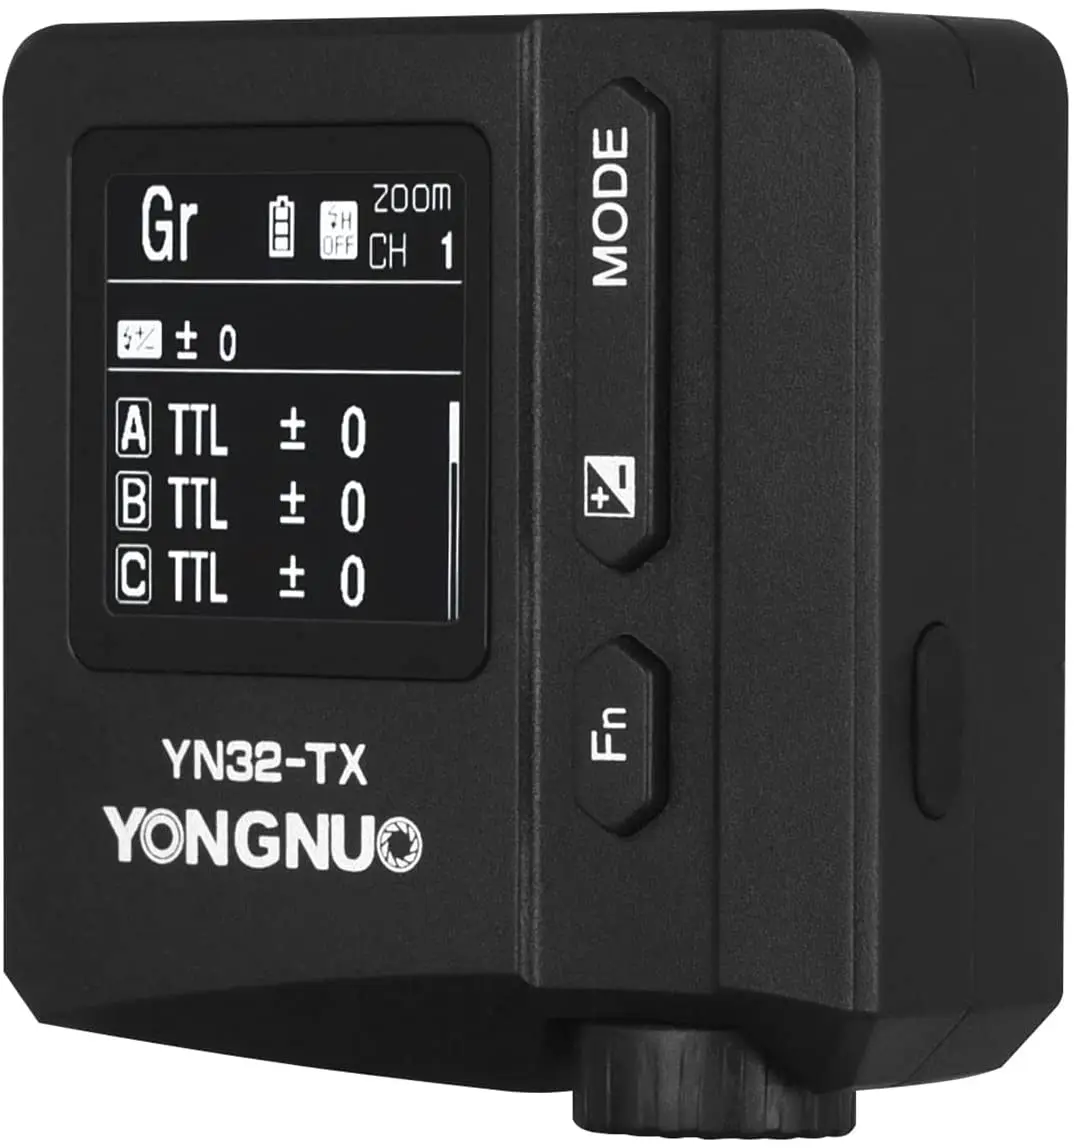 

YONGNUO YN32-TX Wireless Flash Transmitter Trigger HSS TTL 2.4G Trigger System Compatible for Sony MI Hot Shoe Cameras